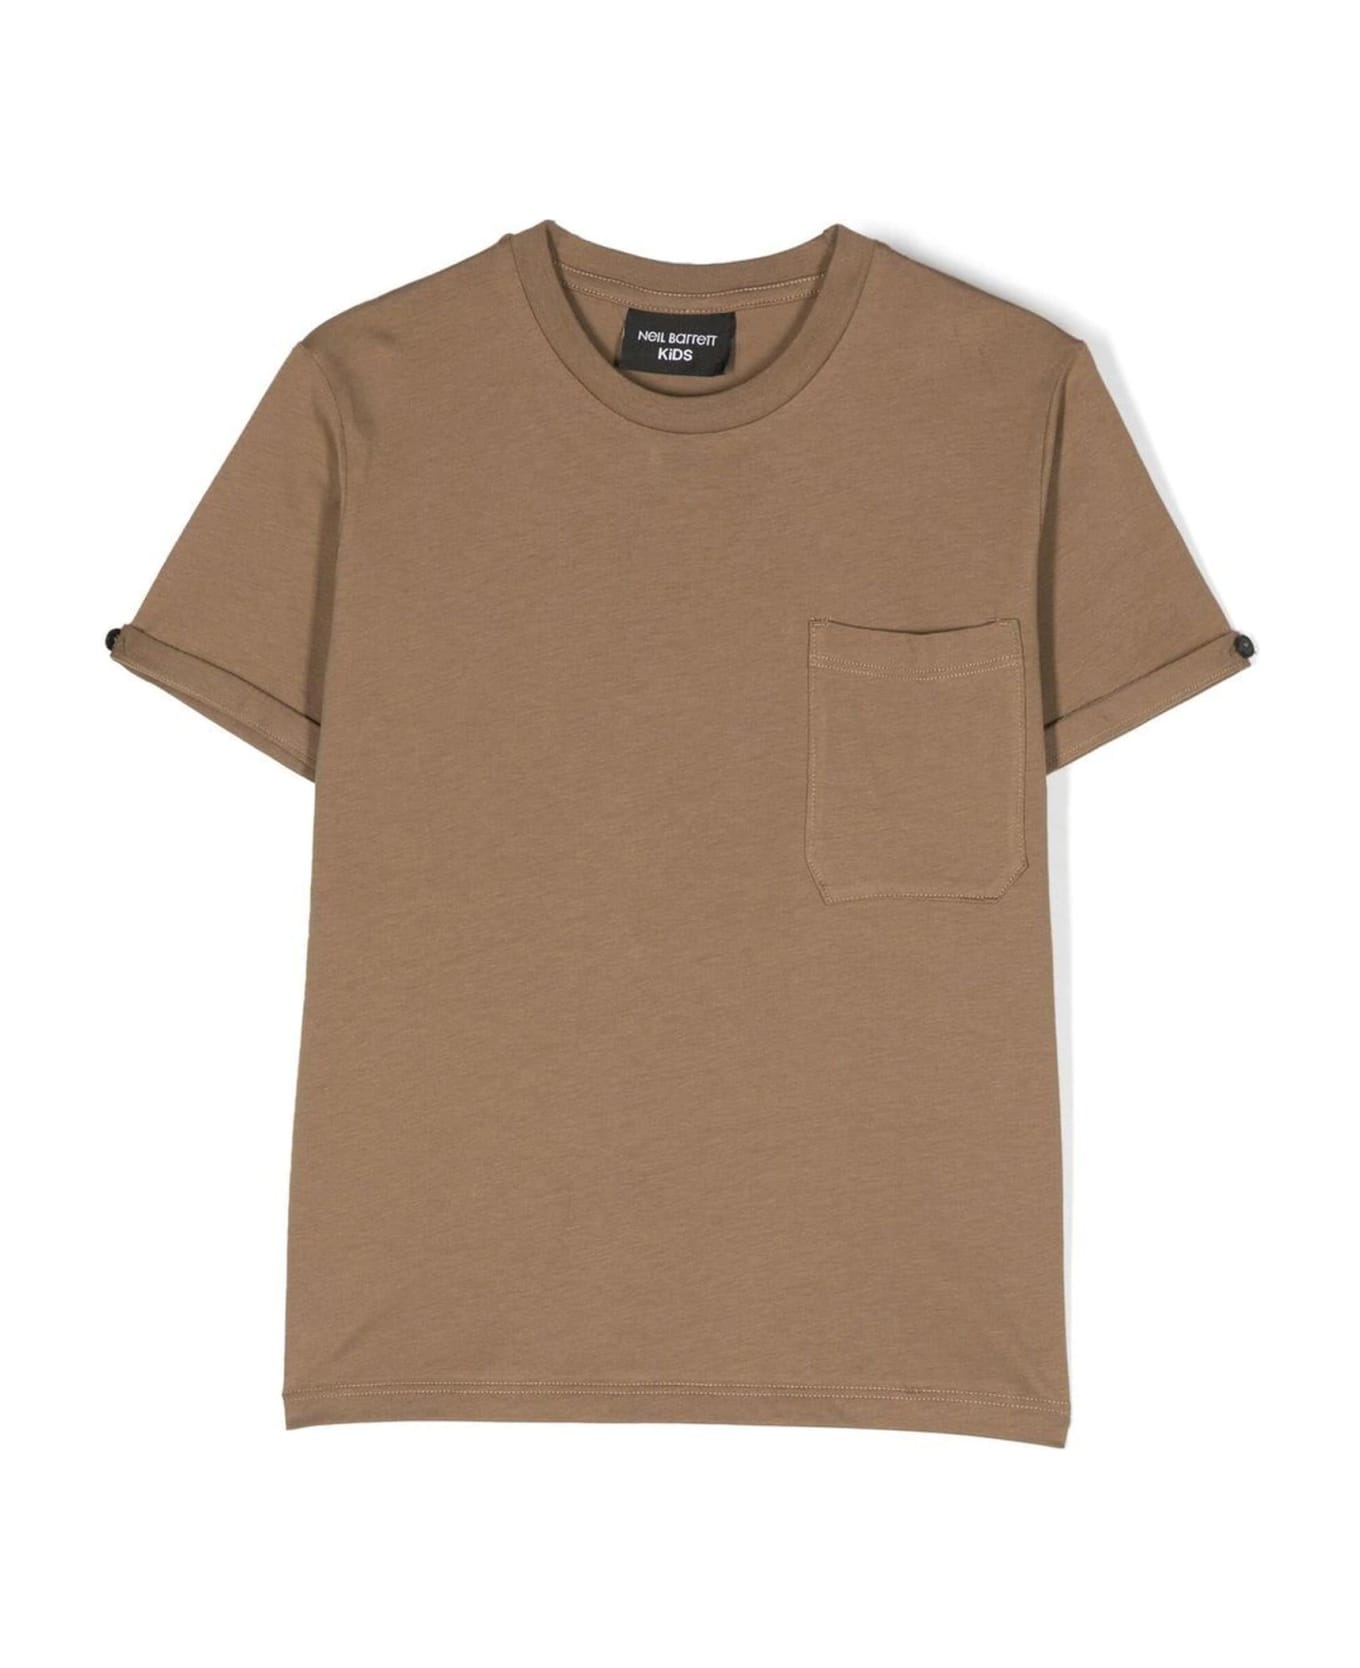 Neil Barrett Brown Cotton Tshirt - Tortora